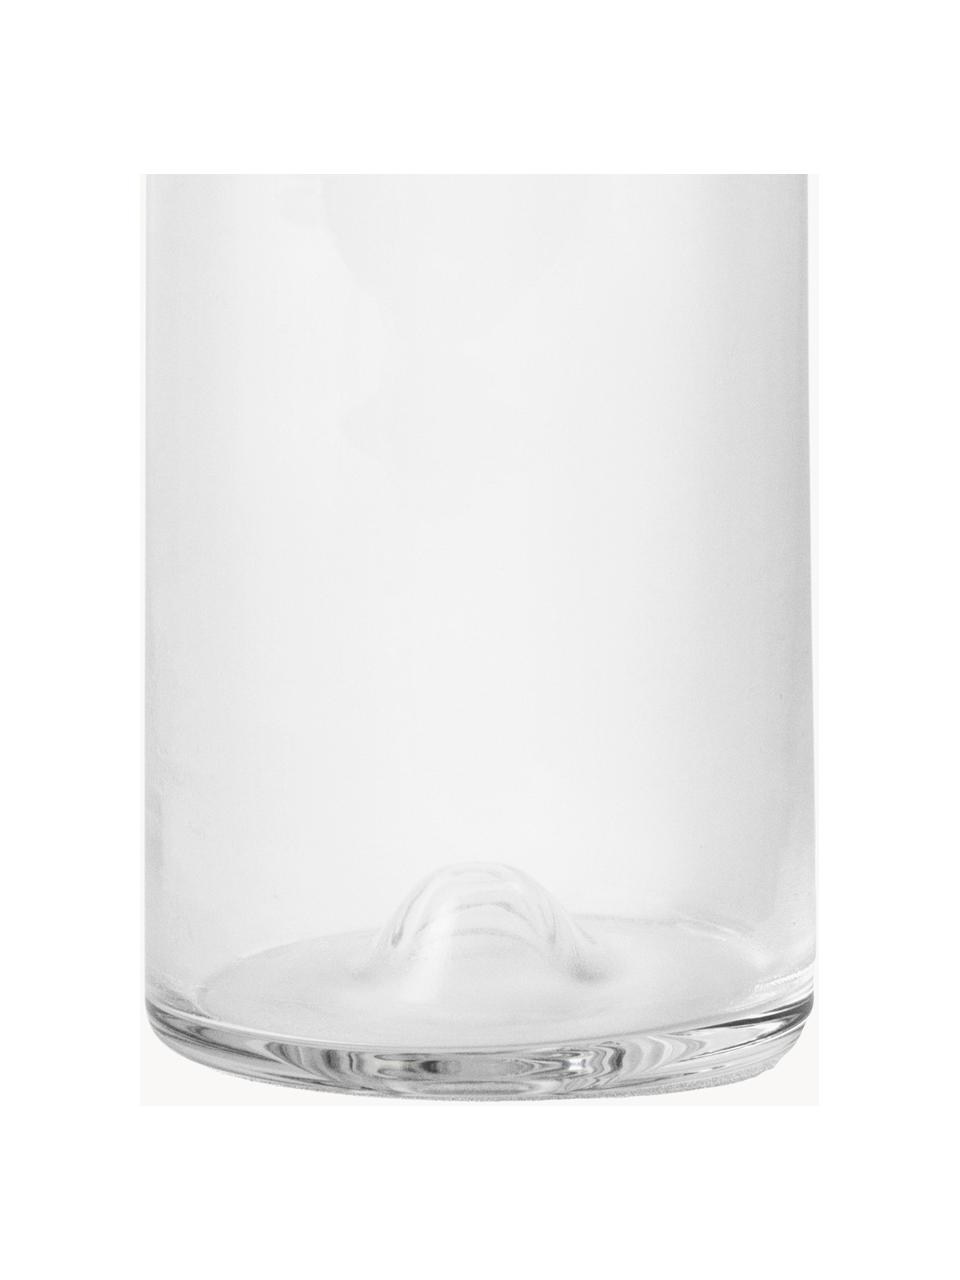 Glazen karaf Deluxe met deksel, 1 L, Mondgeblazen glas, siliconen, Transparant, zwart, 1 L